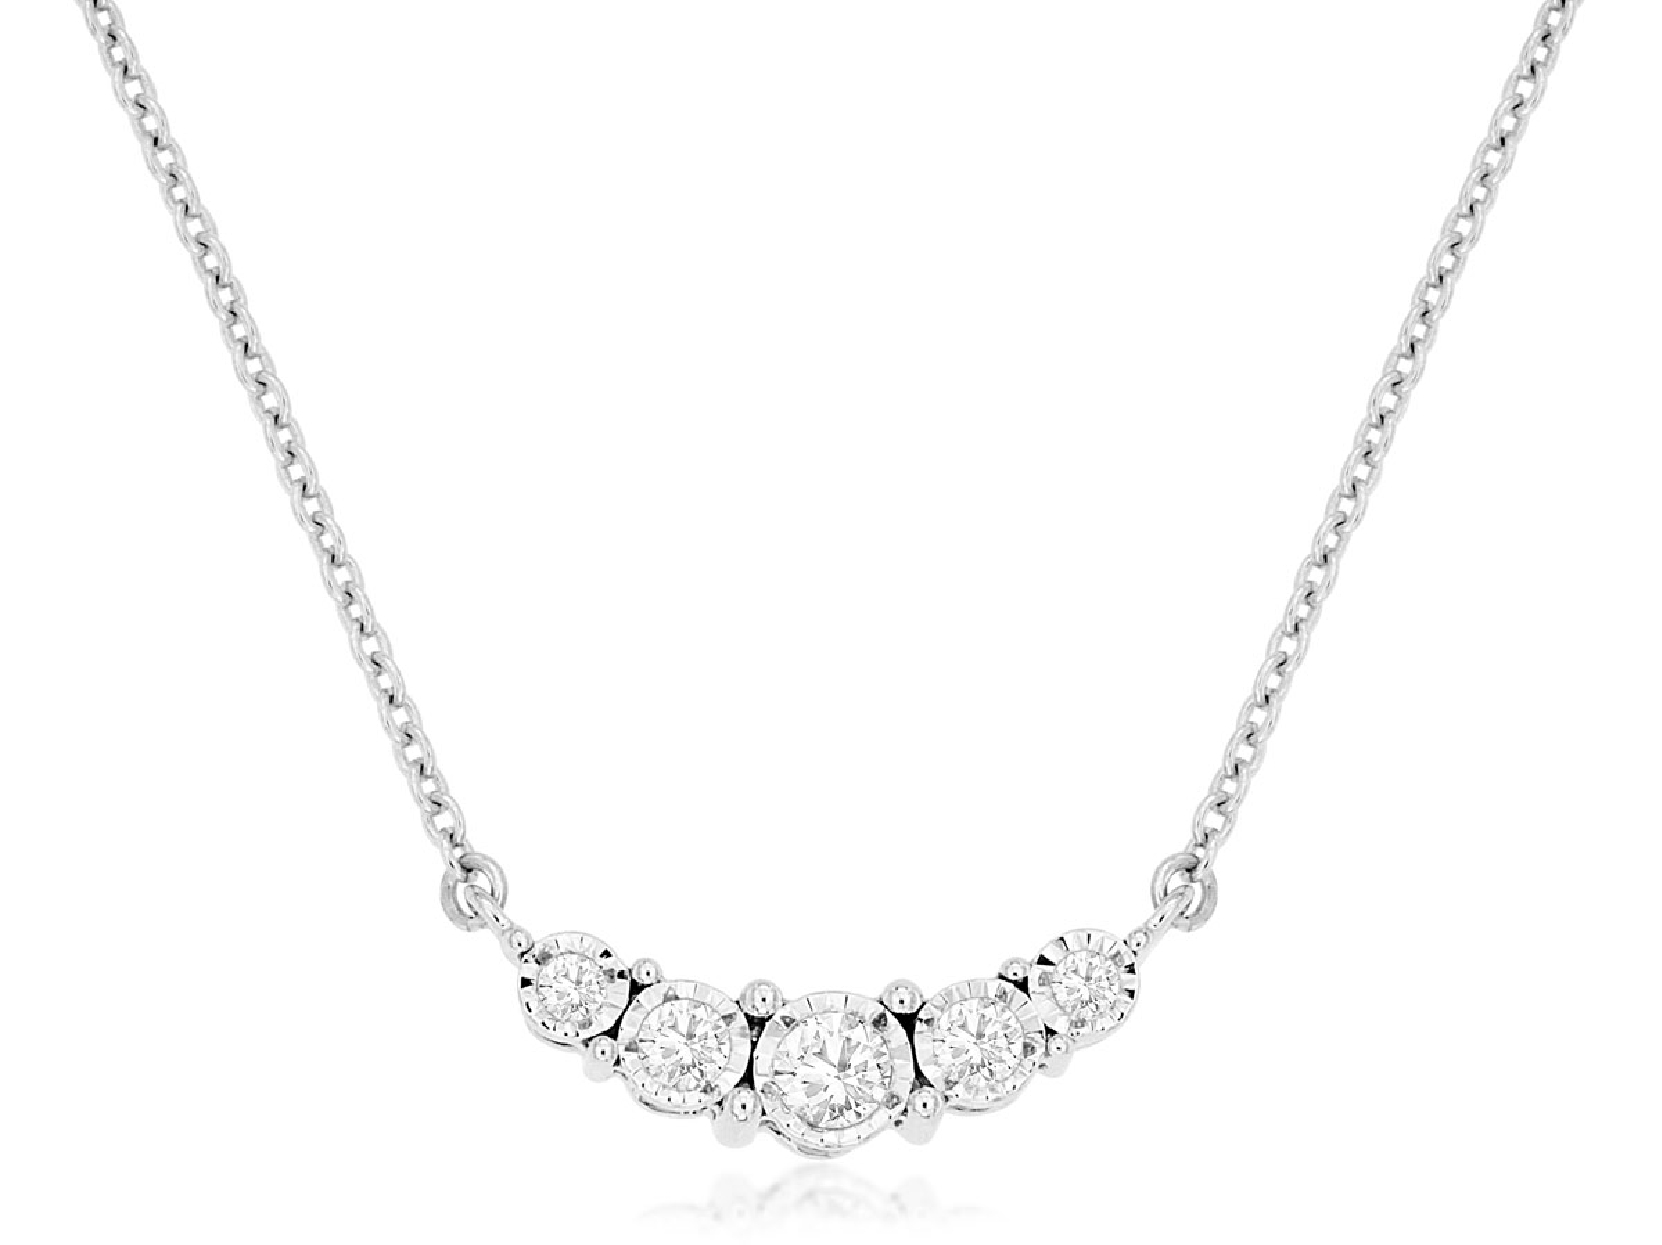 14K White Gold Diamond Smile Necklace 
0.20ct
18 Inches